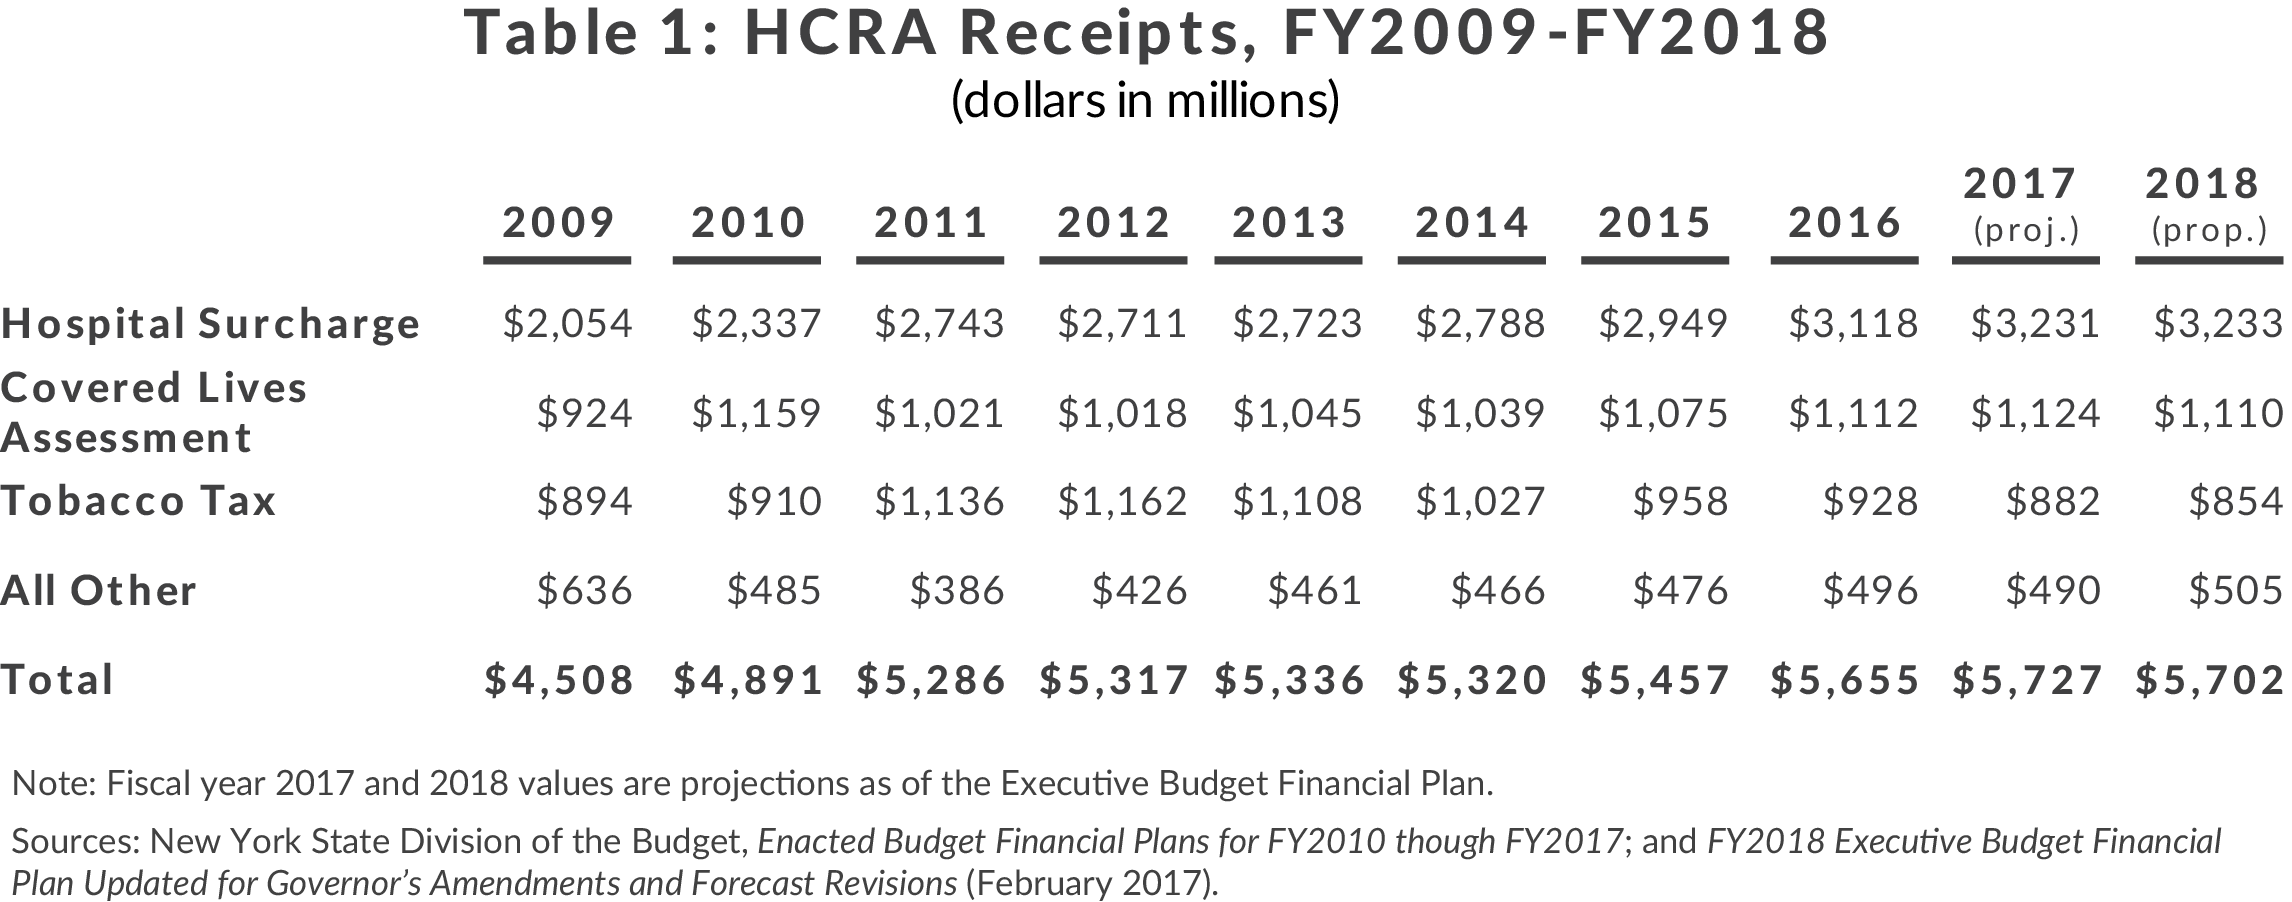 Table 1: HCRA Receipts, FY2009-FY2018